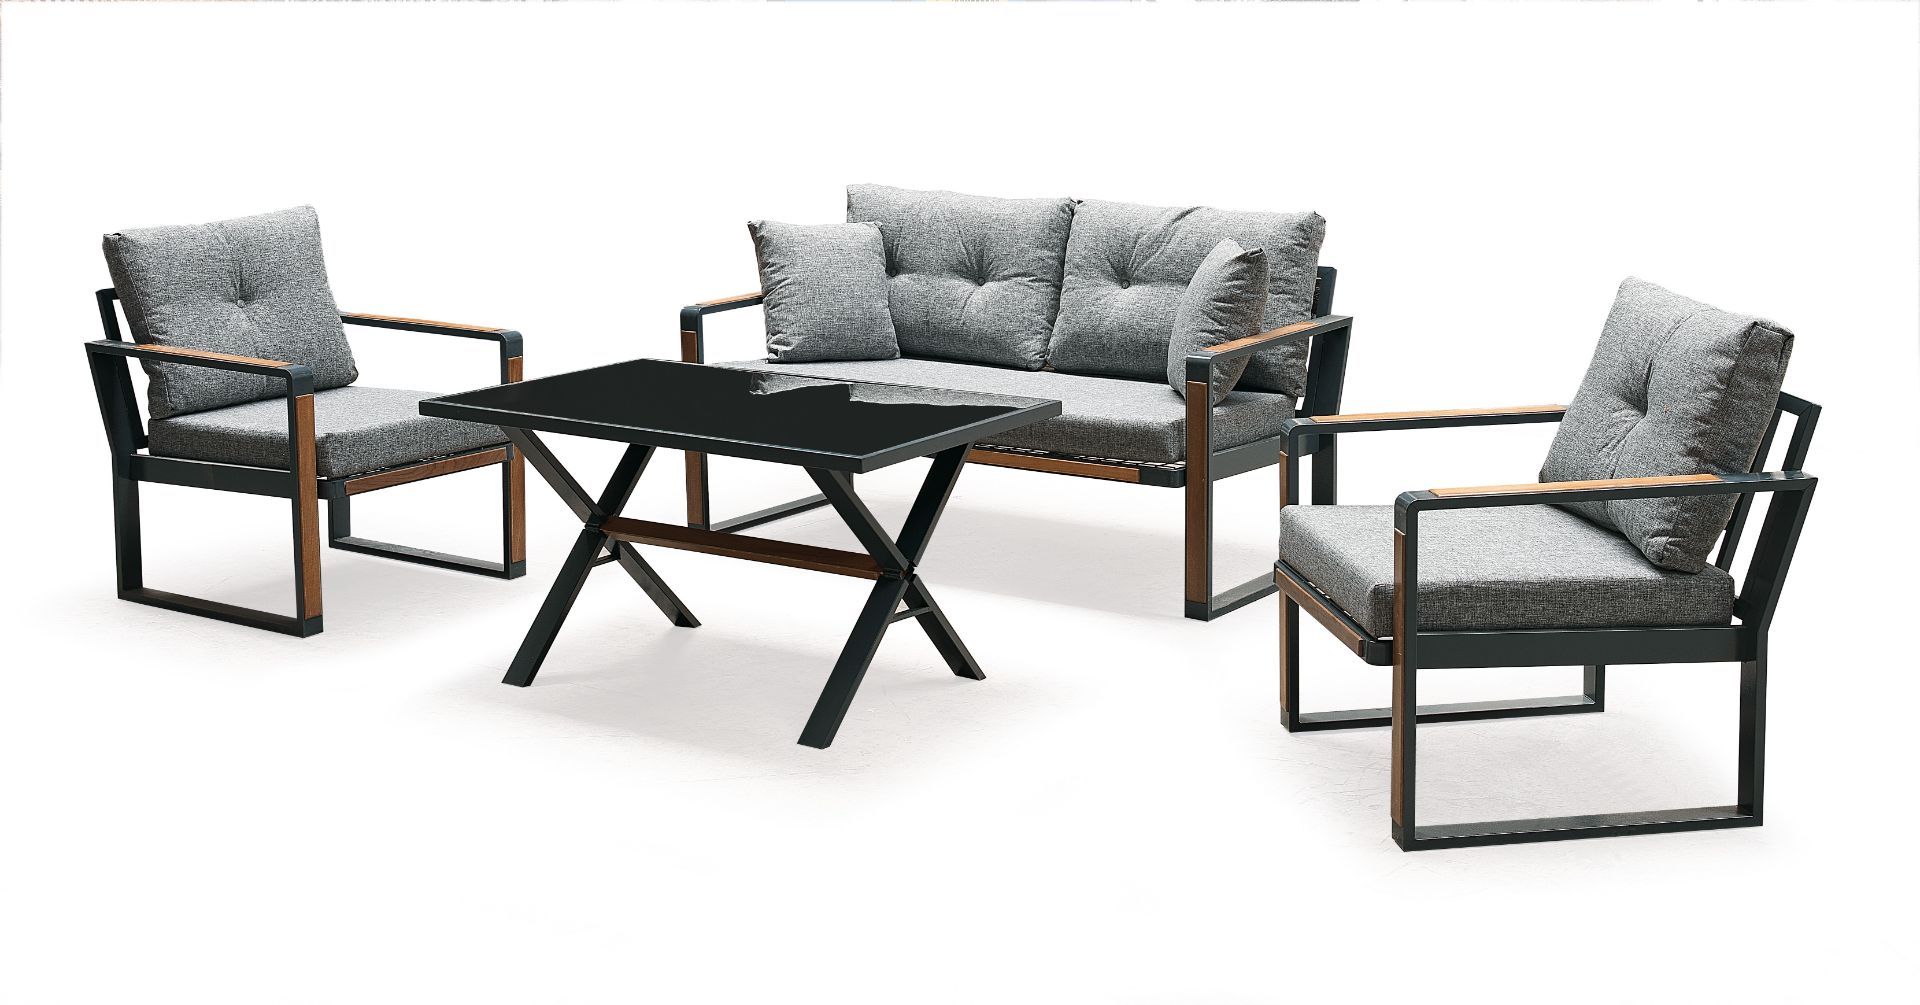 + Vat Brand New SRP £1049.99 The Chelsea Garden Co "Marbella" Range Aluminium 4 Seat Coffee Table